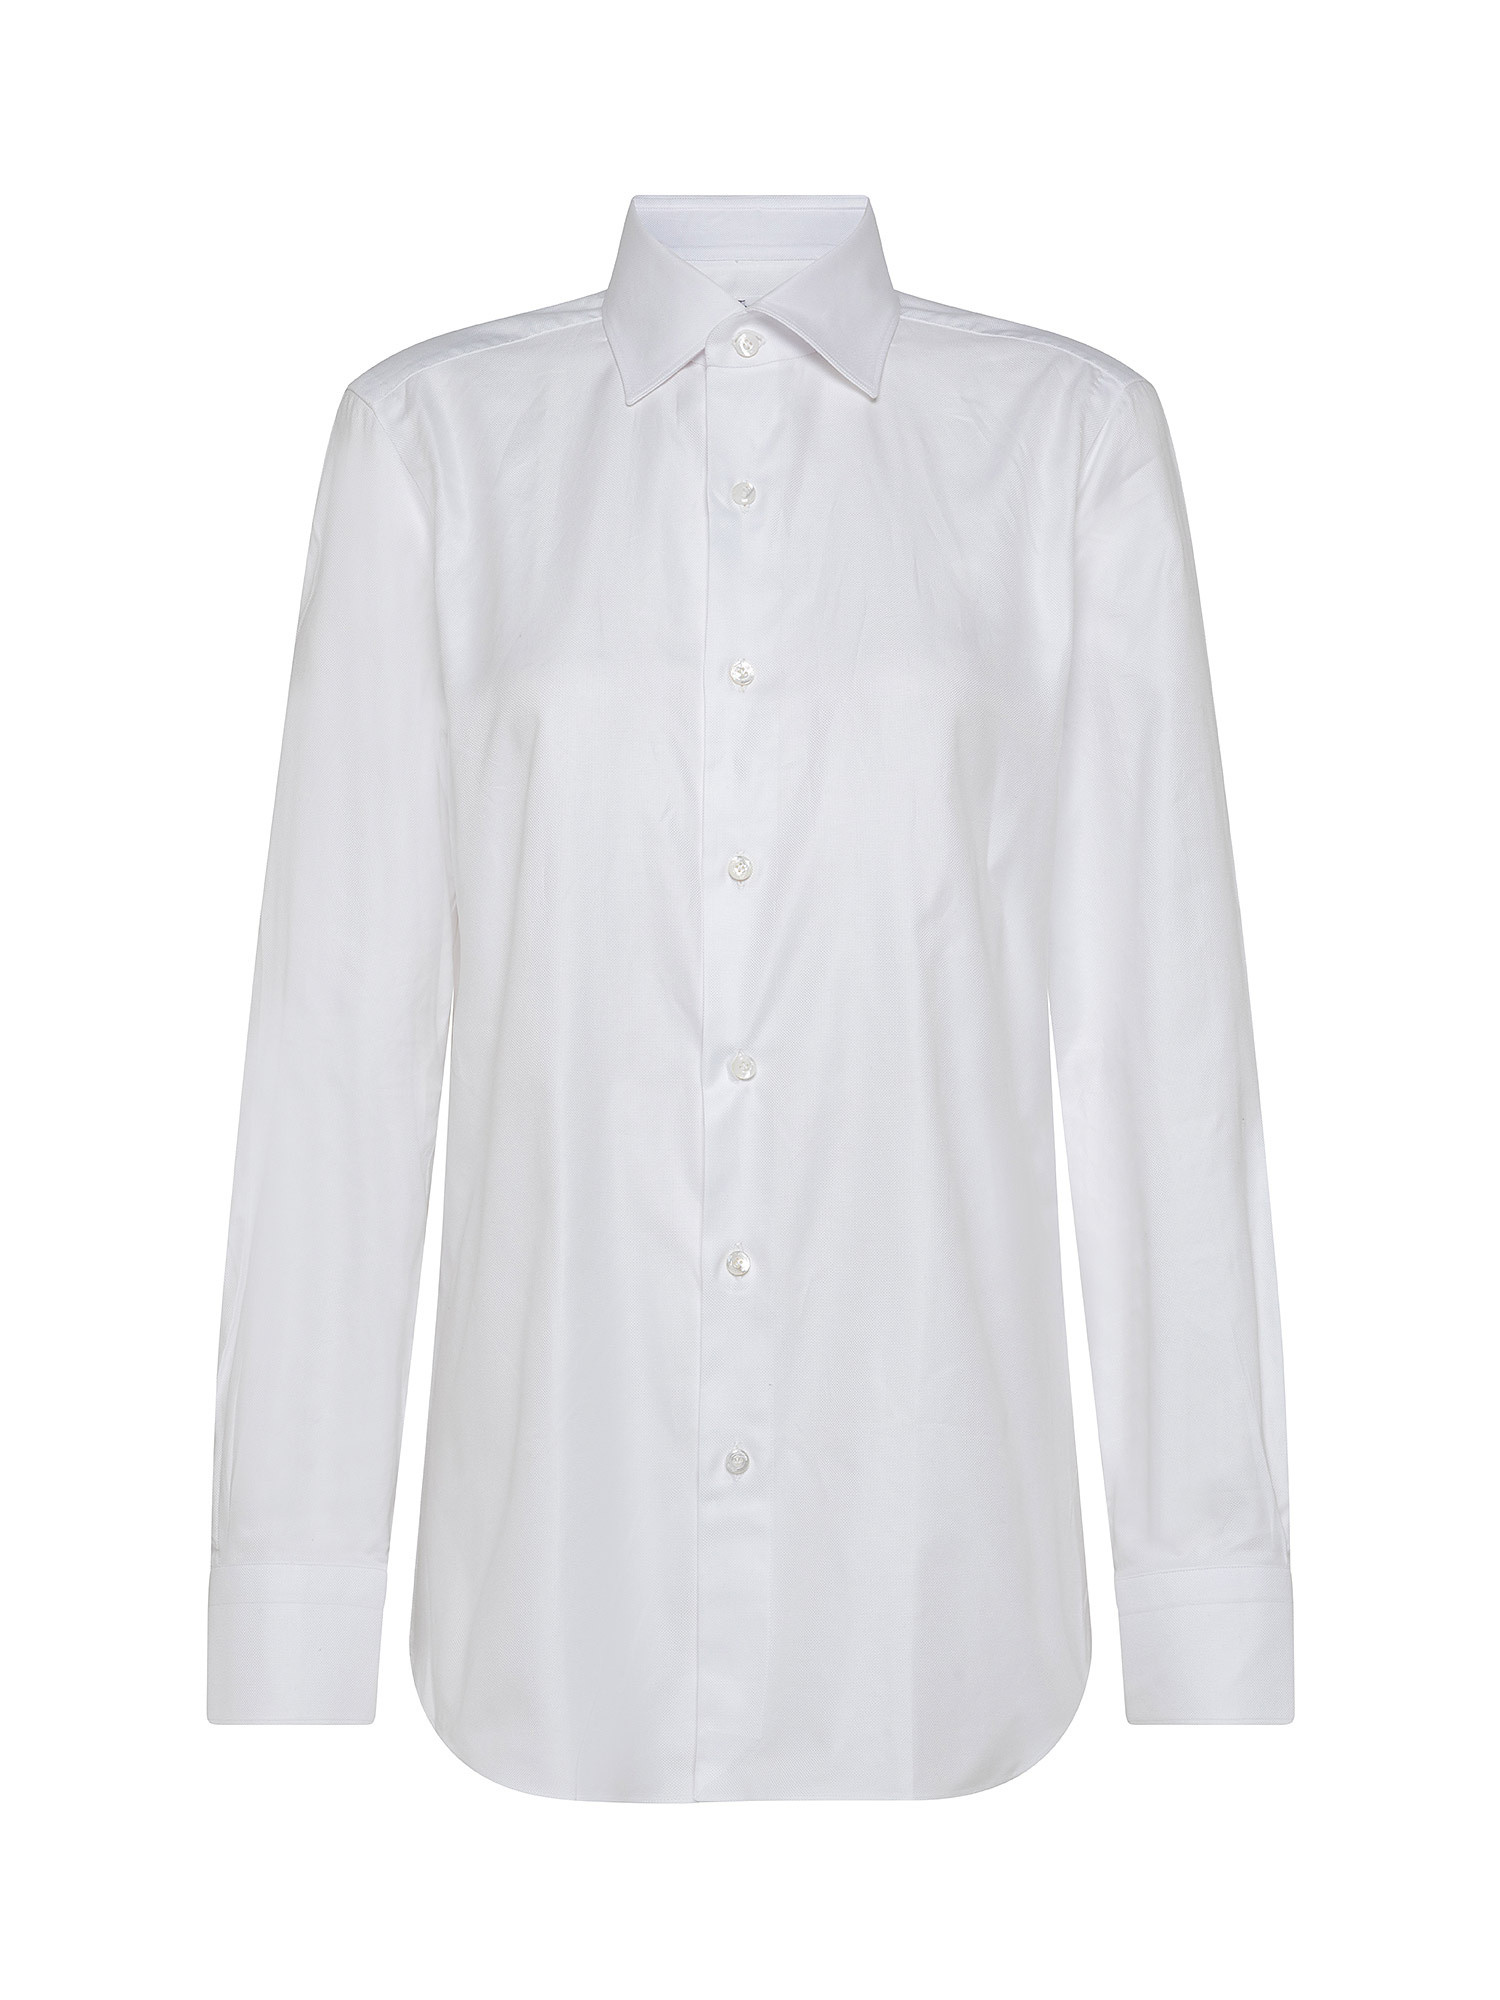 Camicia uomo slim fit, Bianco, large image number 0